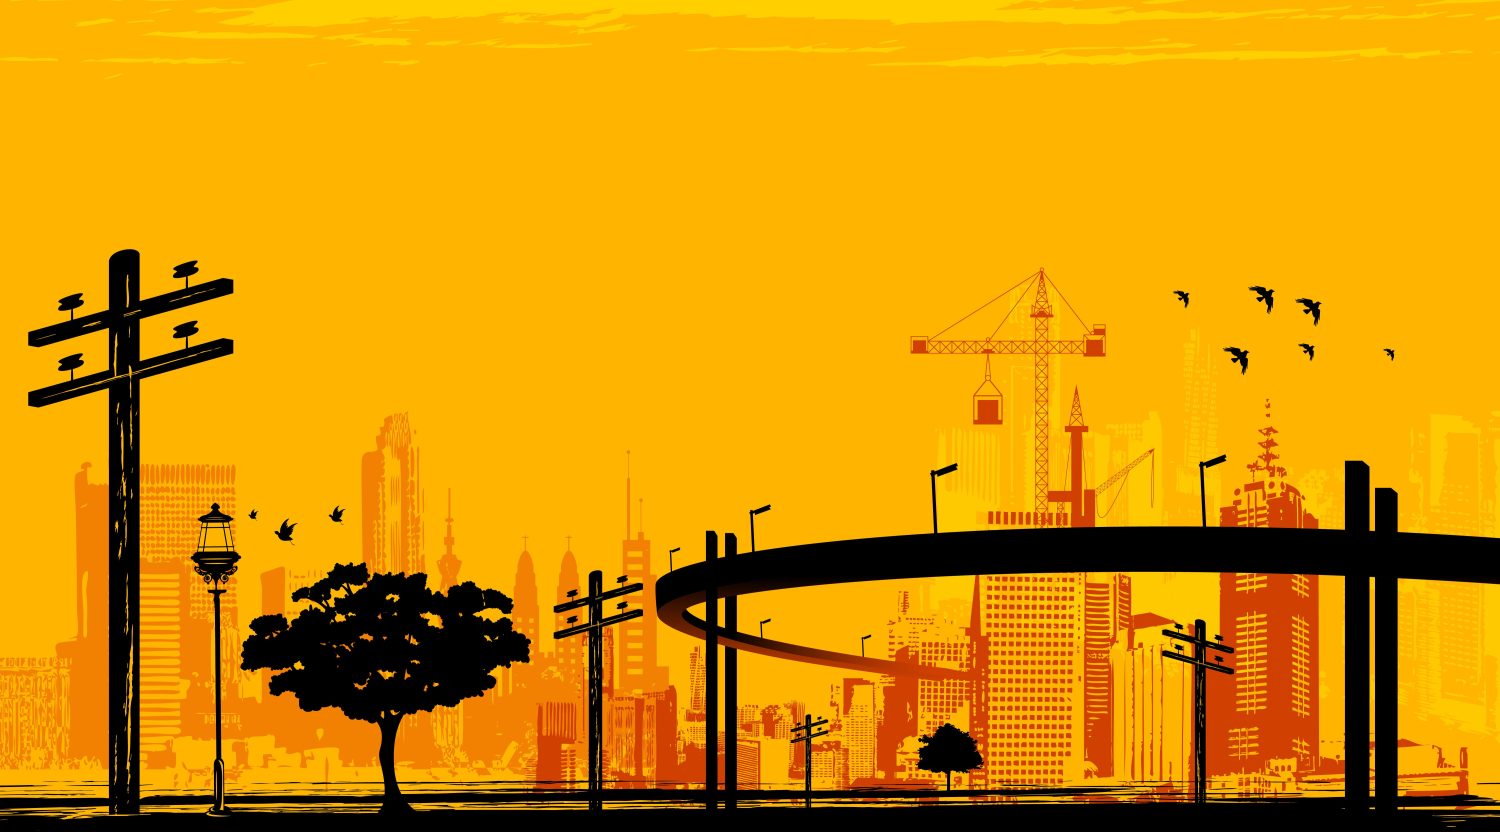 Illustration,Of,Skyscraper,And,Over,Bridge,In,Urban,Infrastructure